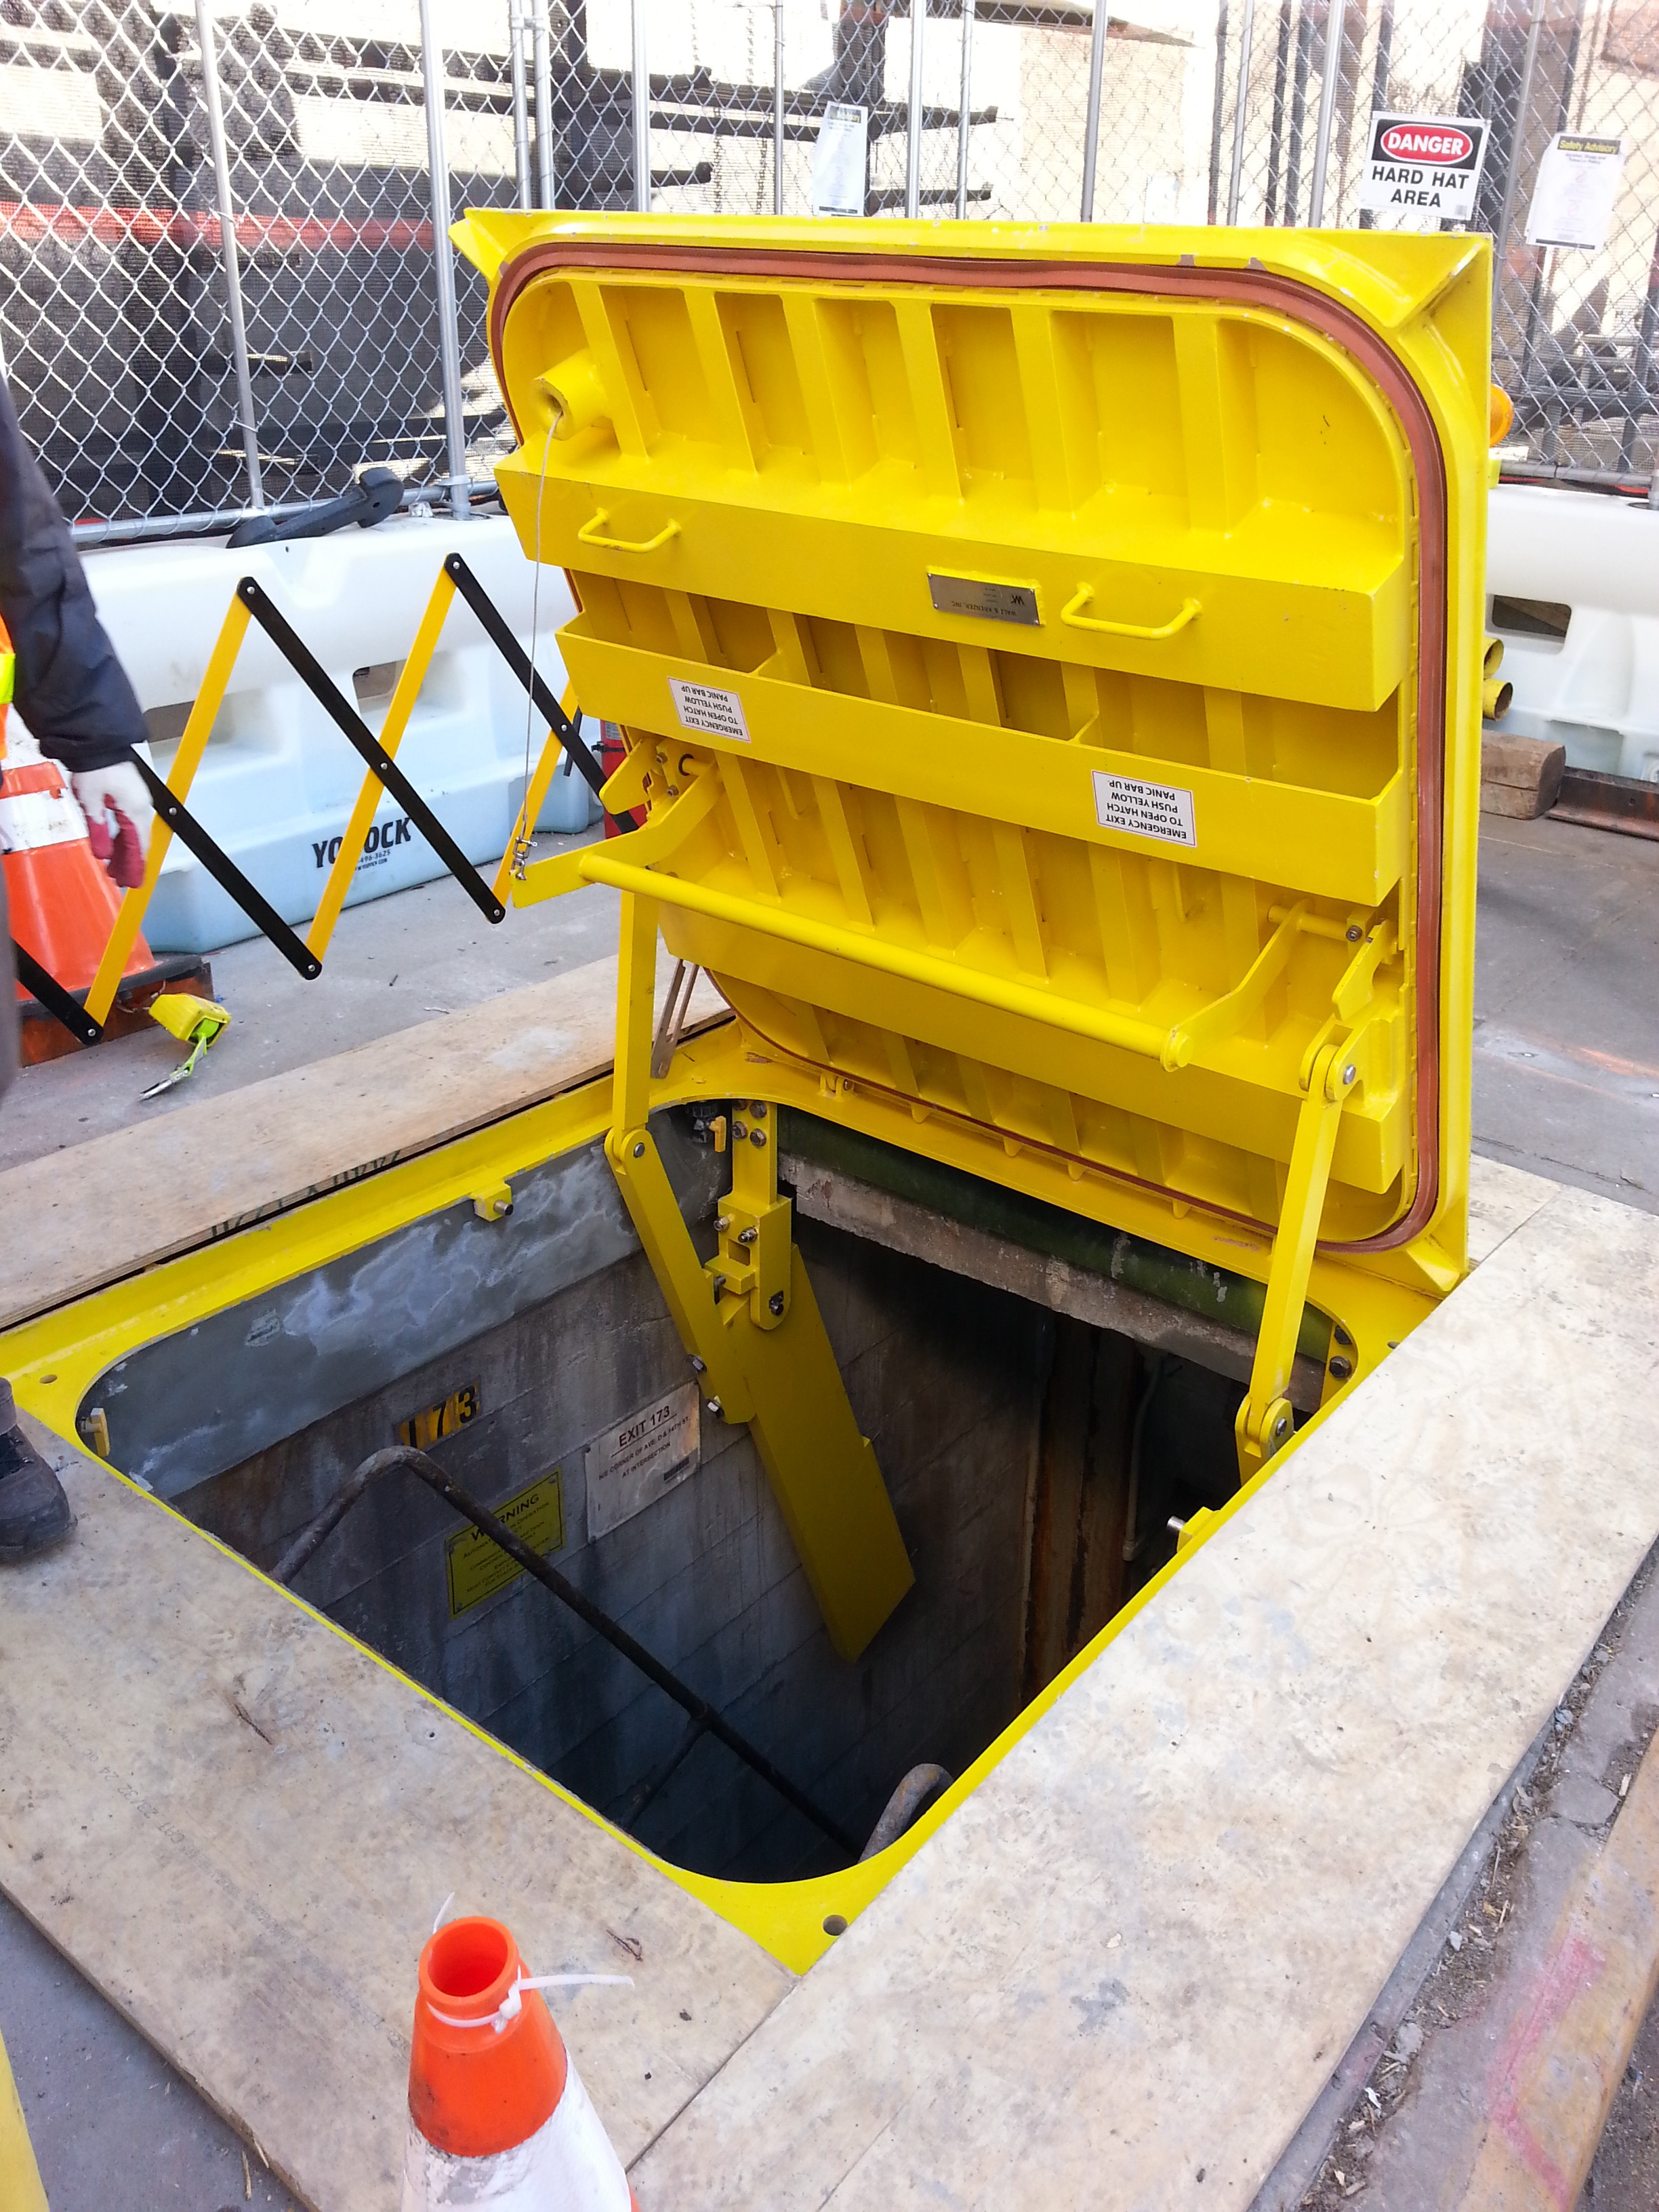 Indeholde Fremragende Terminologi Walz & Krenzer successfully demonstrates installation and operation of an  Emergency Escape Hatch for the MTA - Walz & Krenzer, Inc